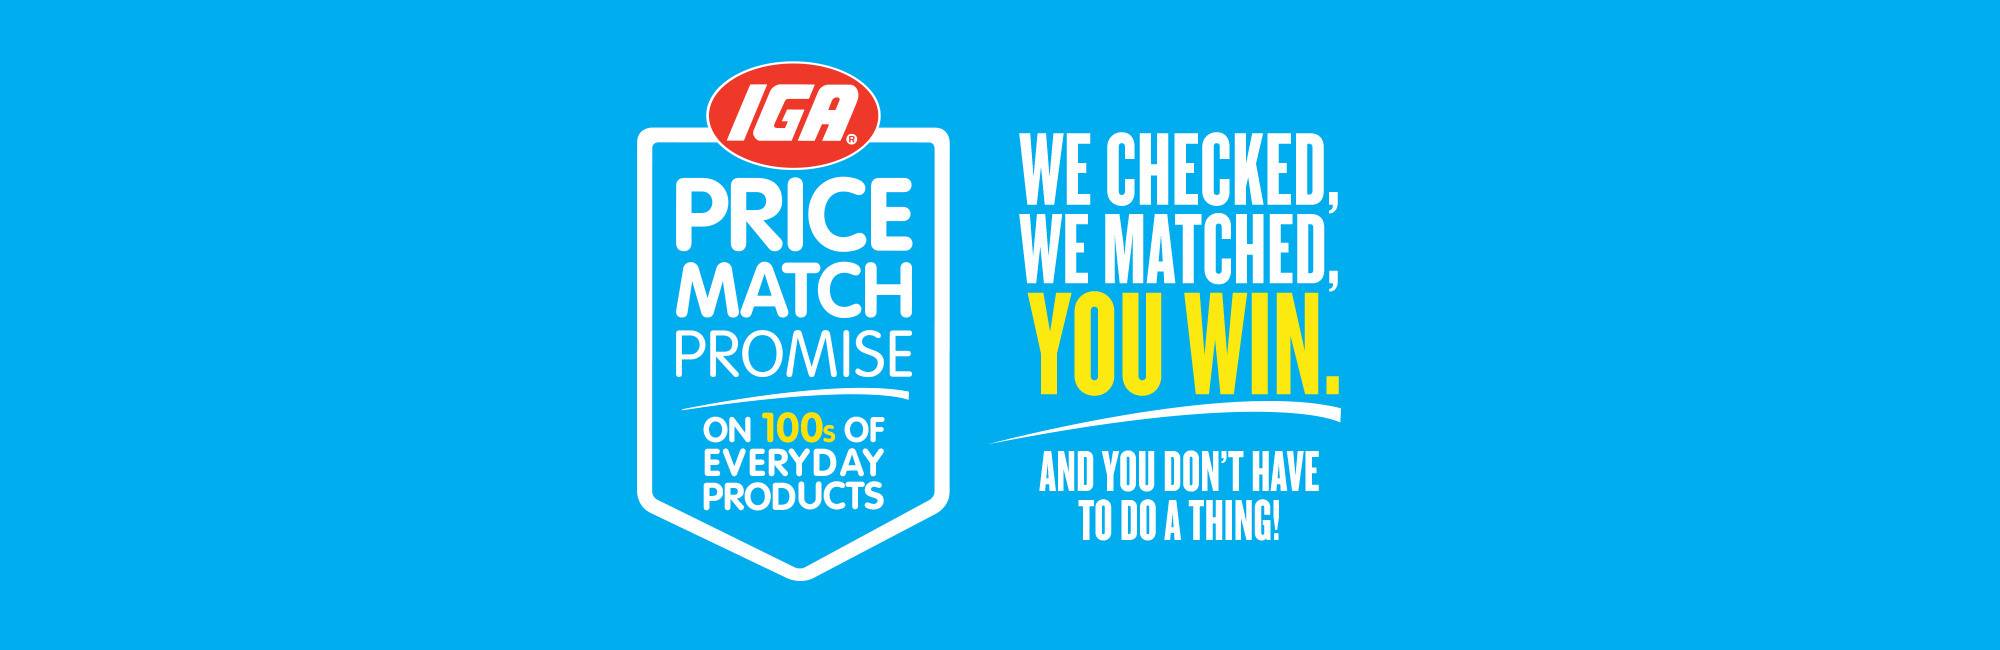 IGA Price Match Promise Header3